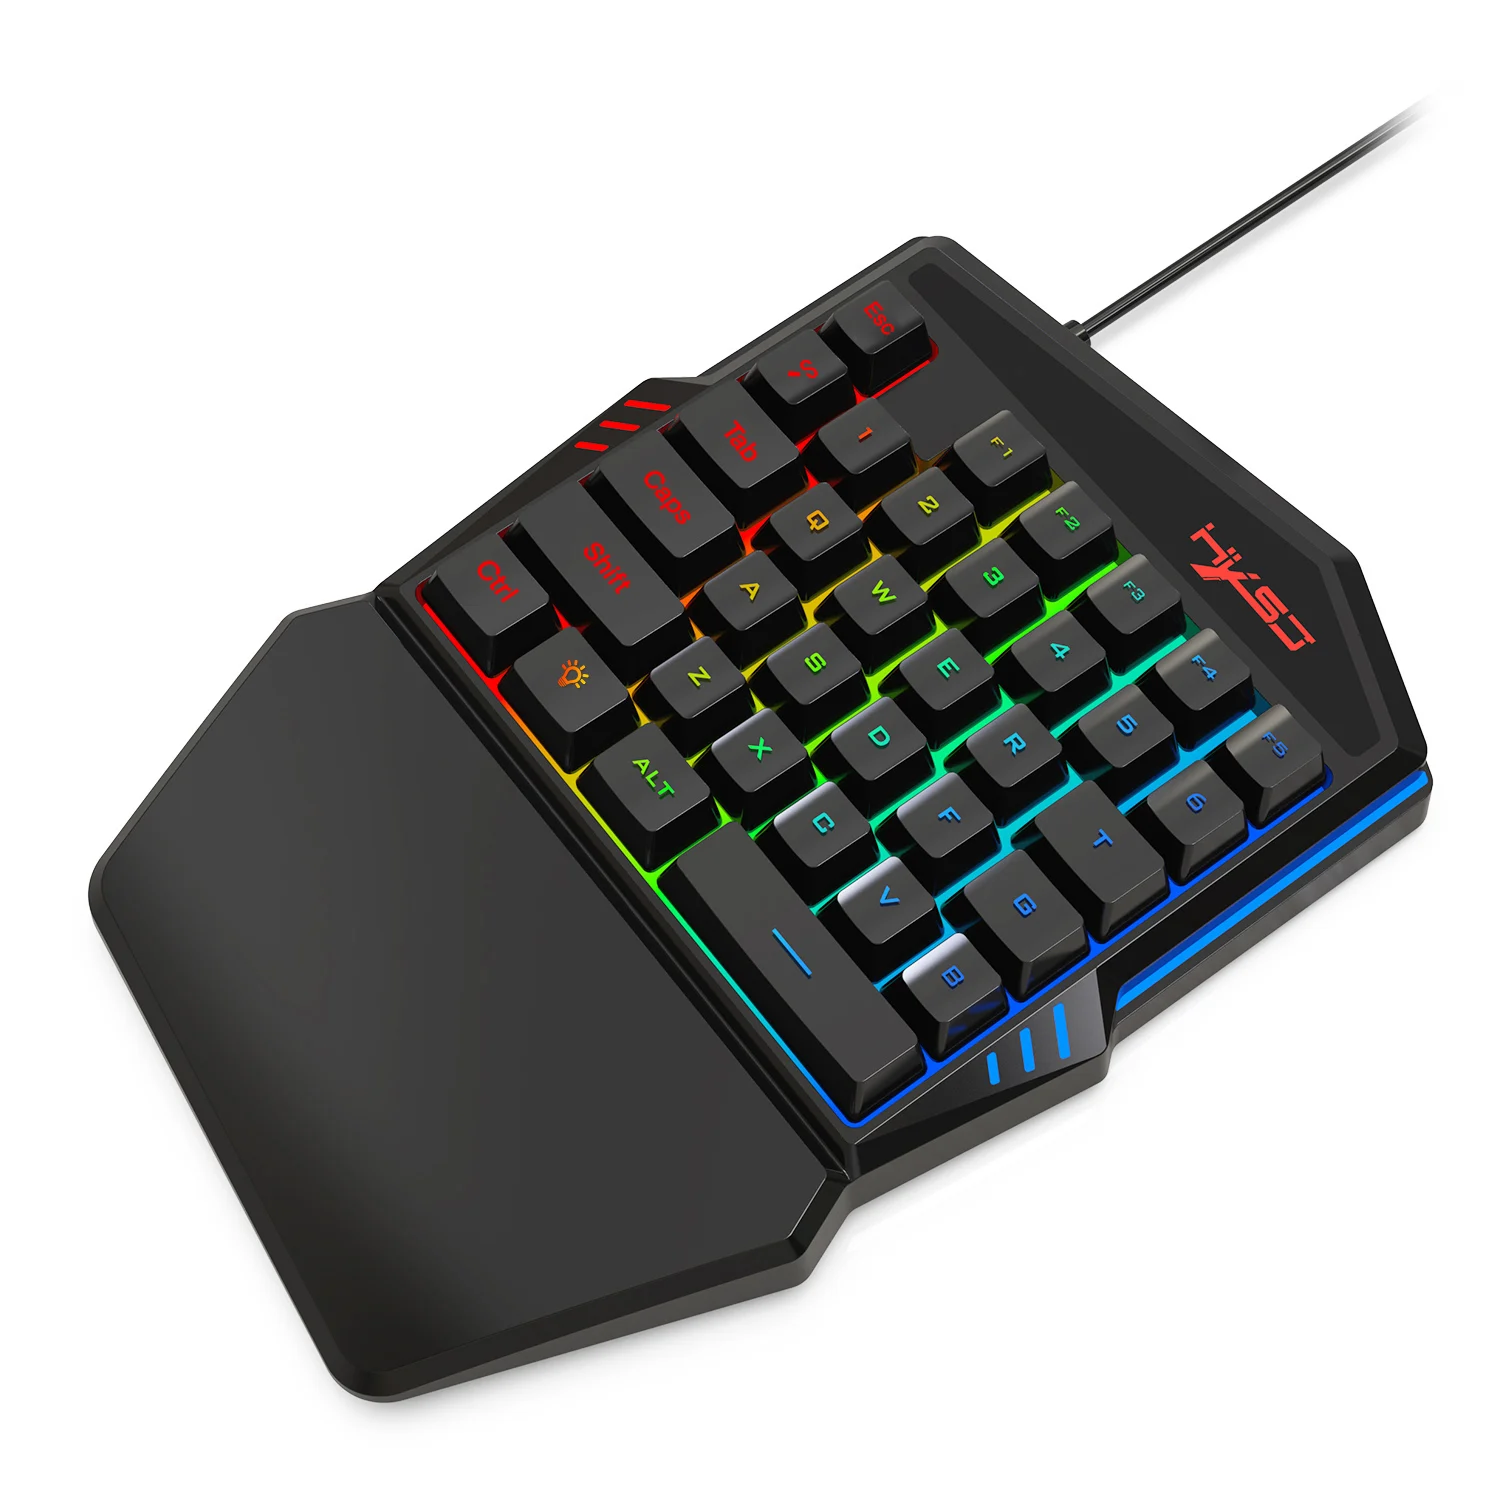 

HXSJ V100 V100-2 35 Key Gaming Keyboard Single Hand LED Backlight Keyboard with USB Wired for PUBG LOL CS Gamer